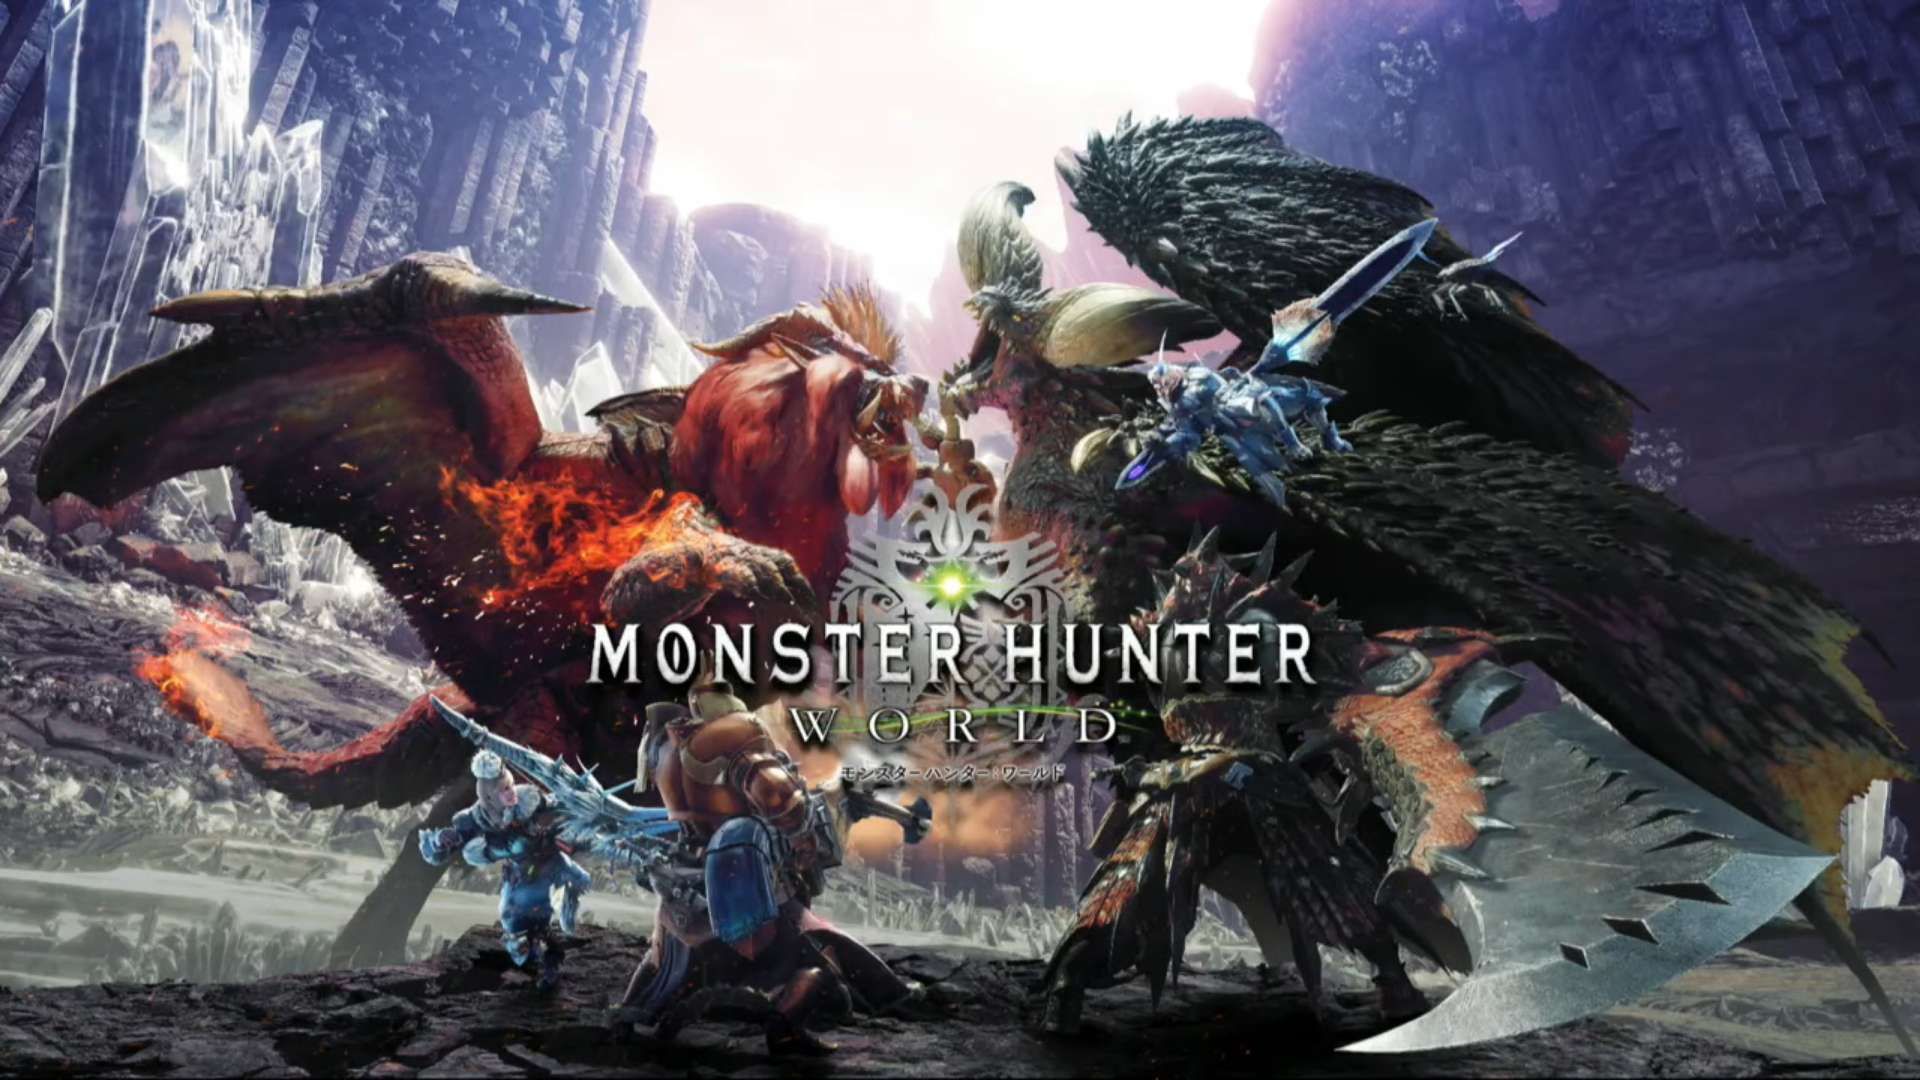 Monster Hunter World Title Update 2 Is Live Kicks Off Autumn Harvest Fest Event And Distributes Free Character Edit Voucher Gameranx